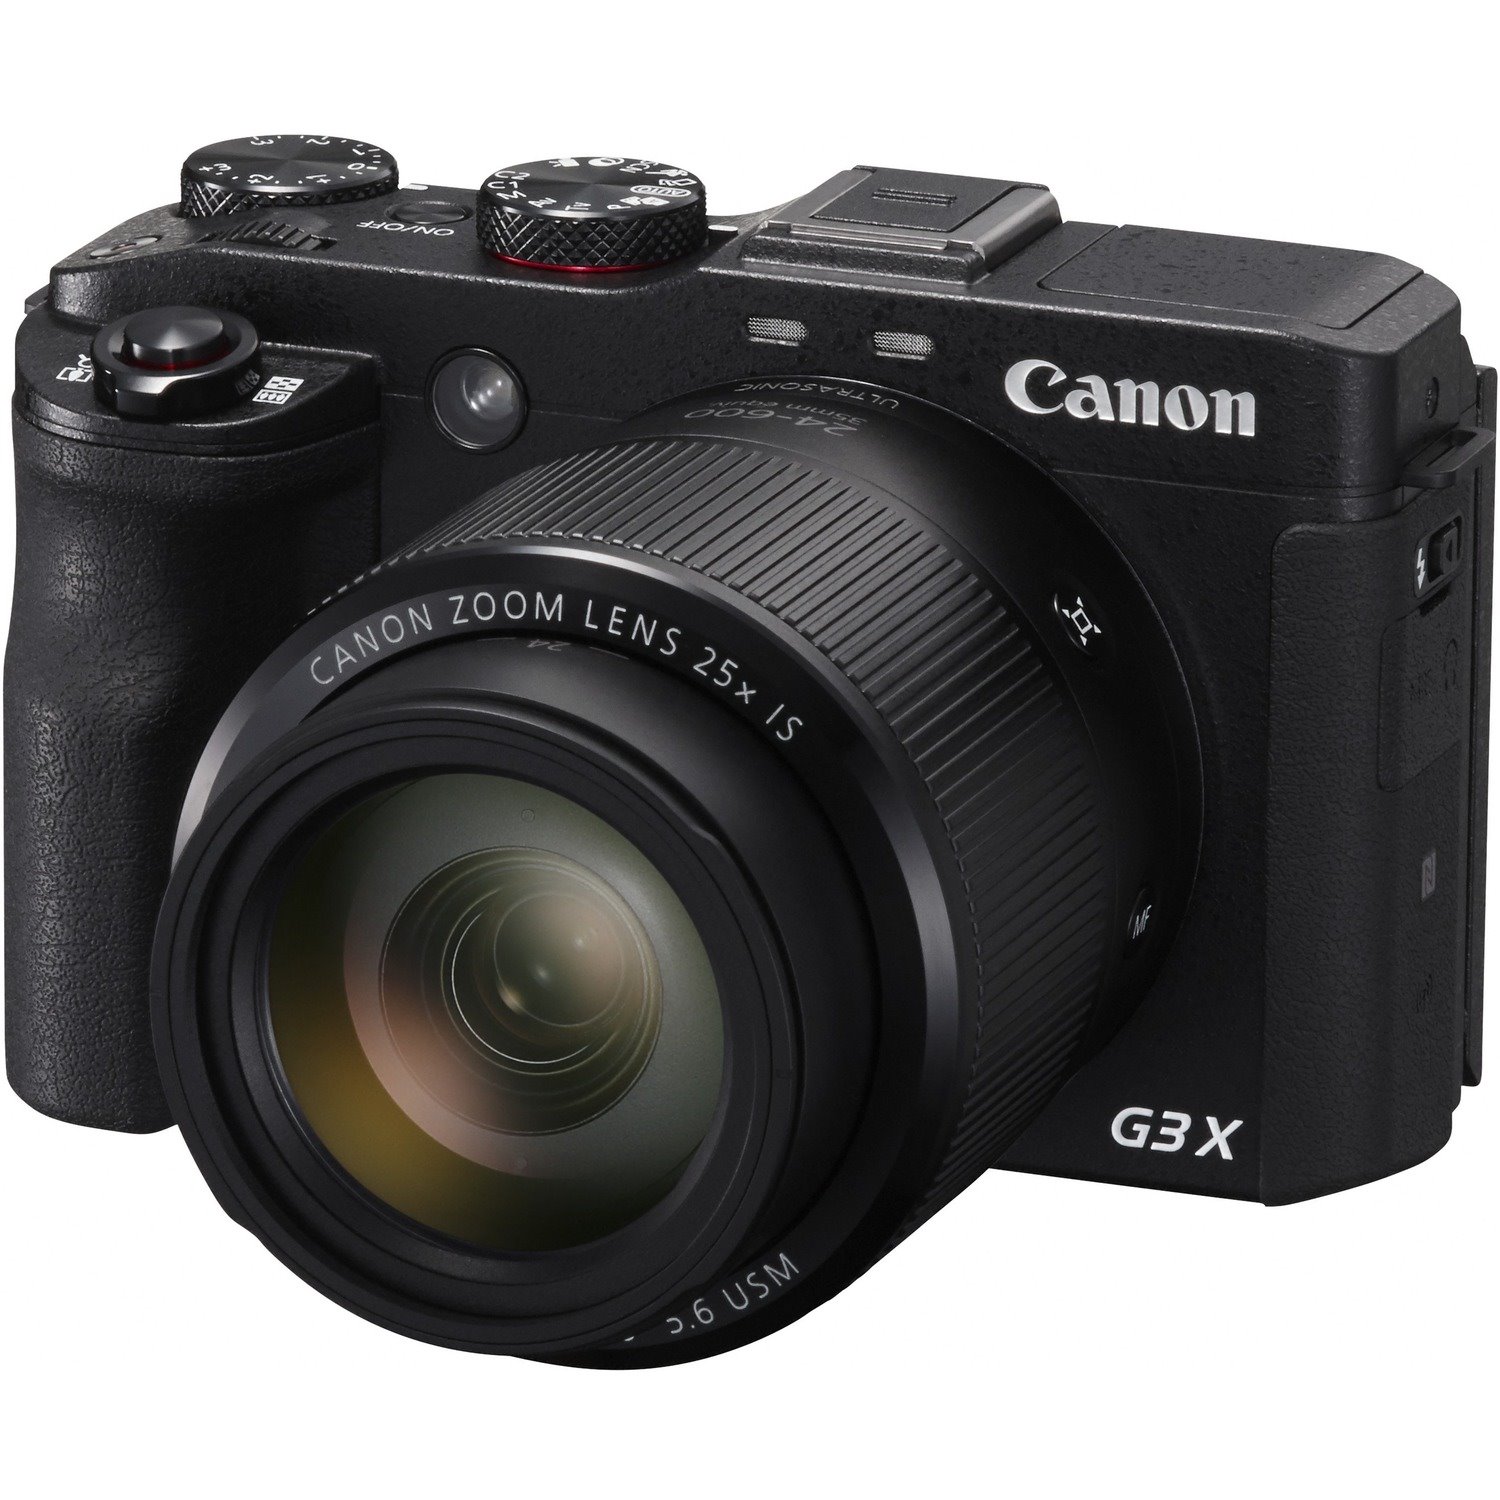 Canon PowerShot G3 X 20.2 Megapixel Bridge Camera